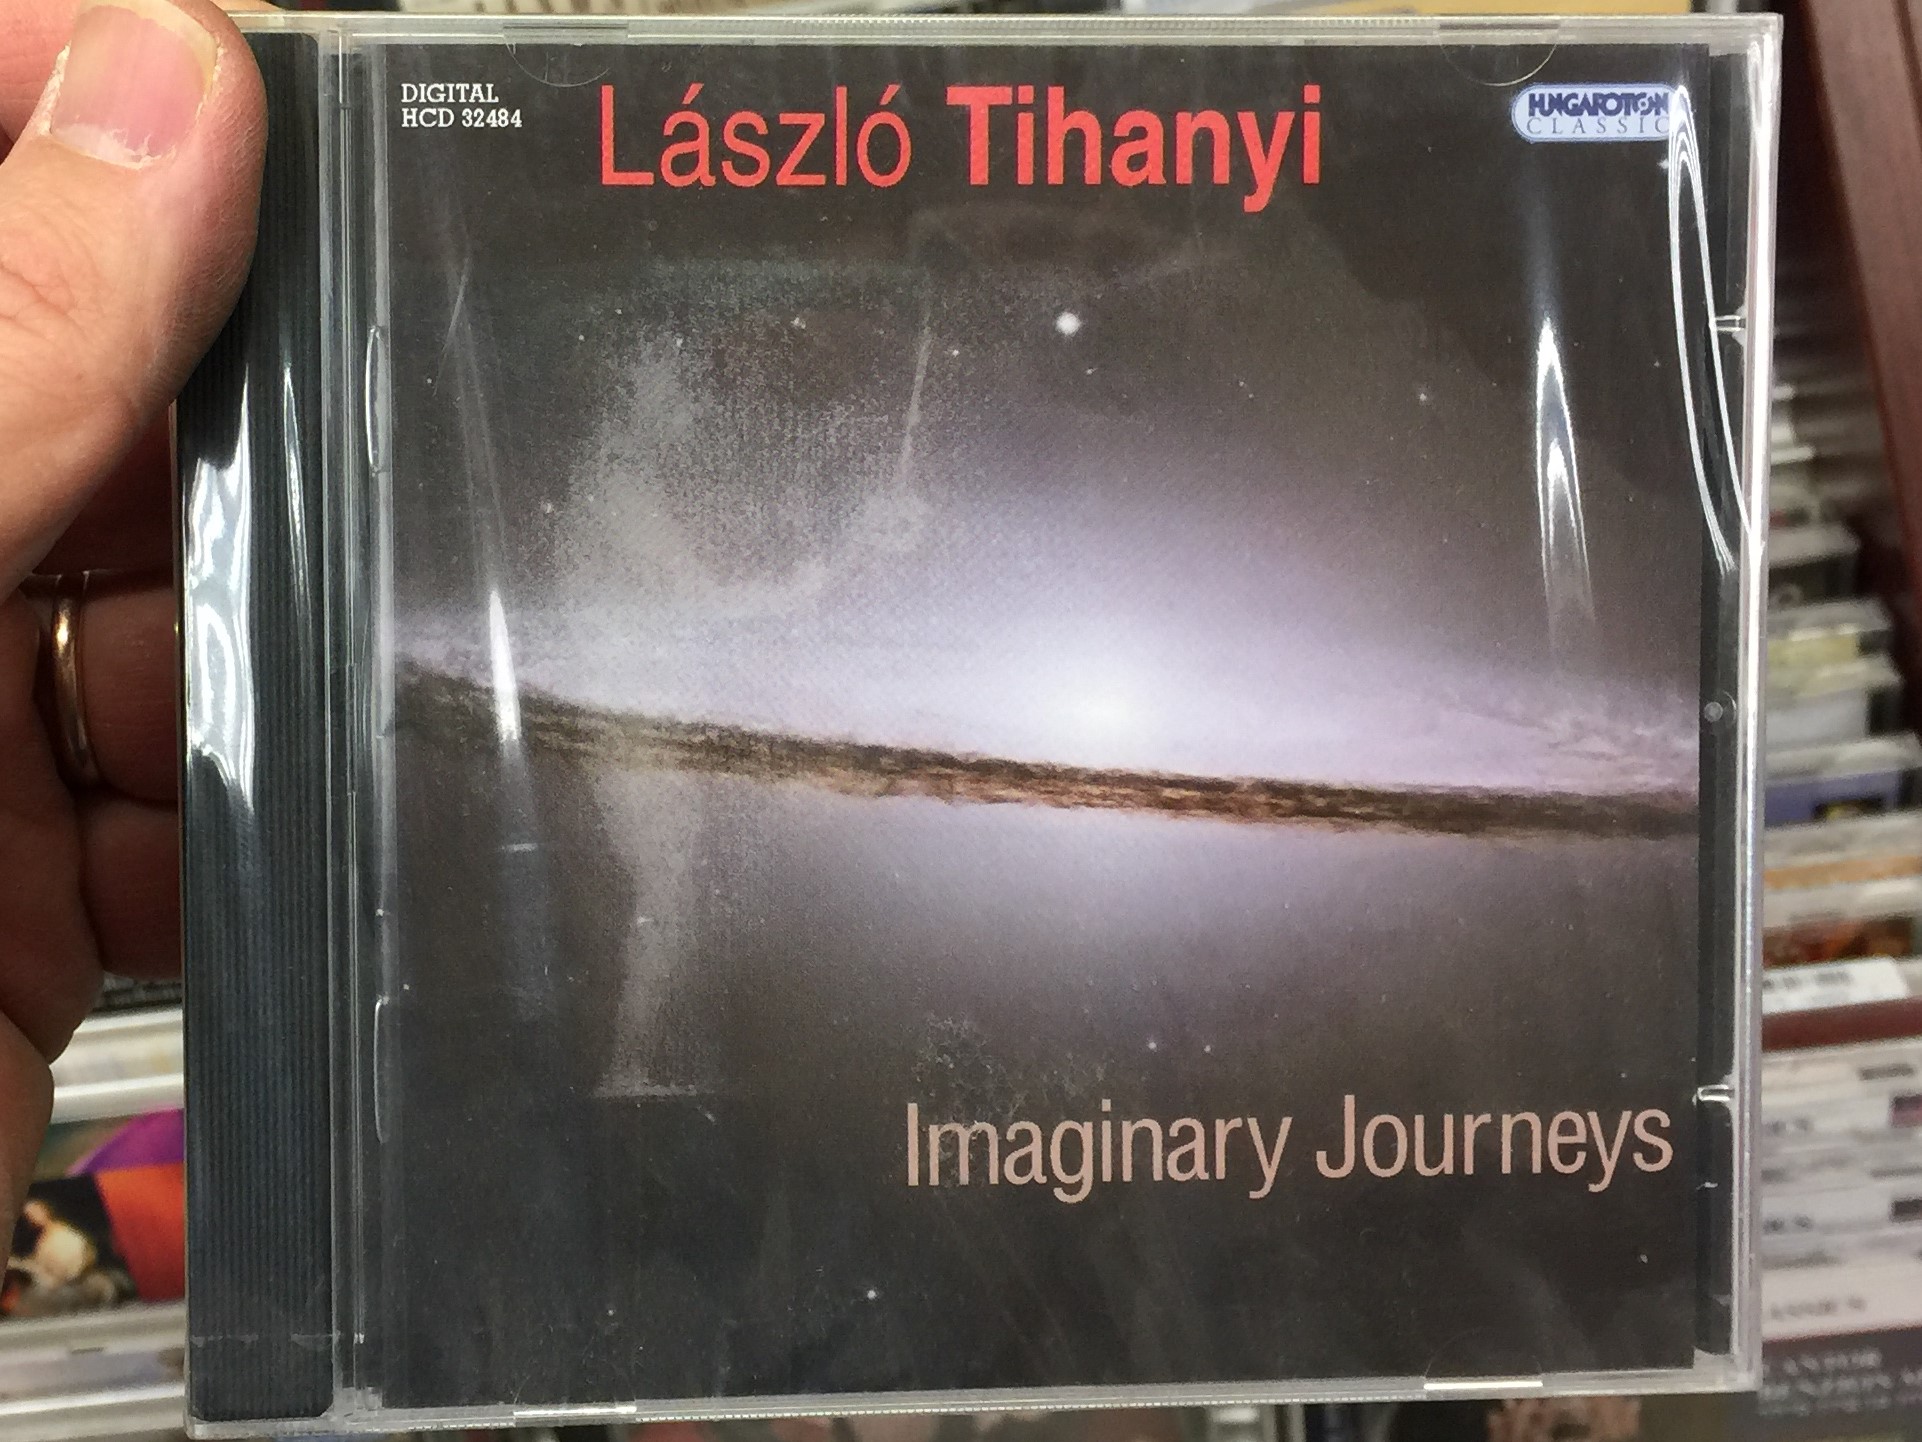 laszlo-tihanyi-imaginary-journeys-hungaroton-classic-audio-cd-2008-stereo-hcd-32484-1-.jpg